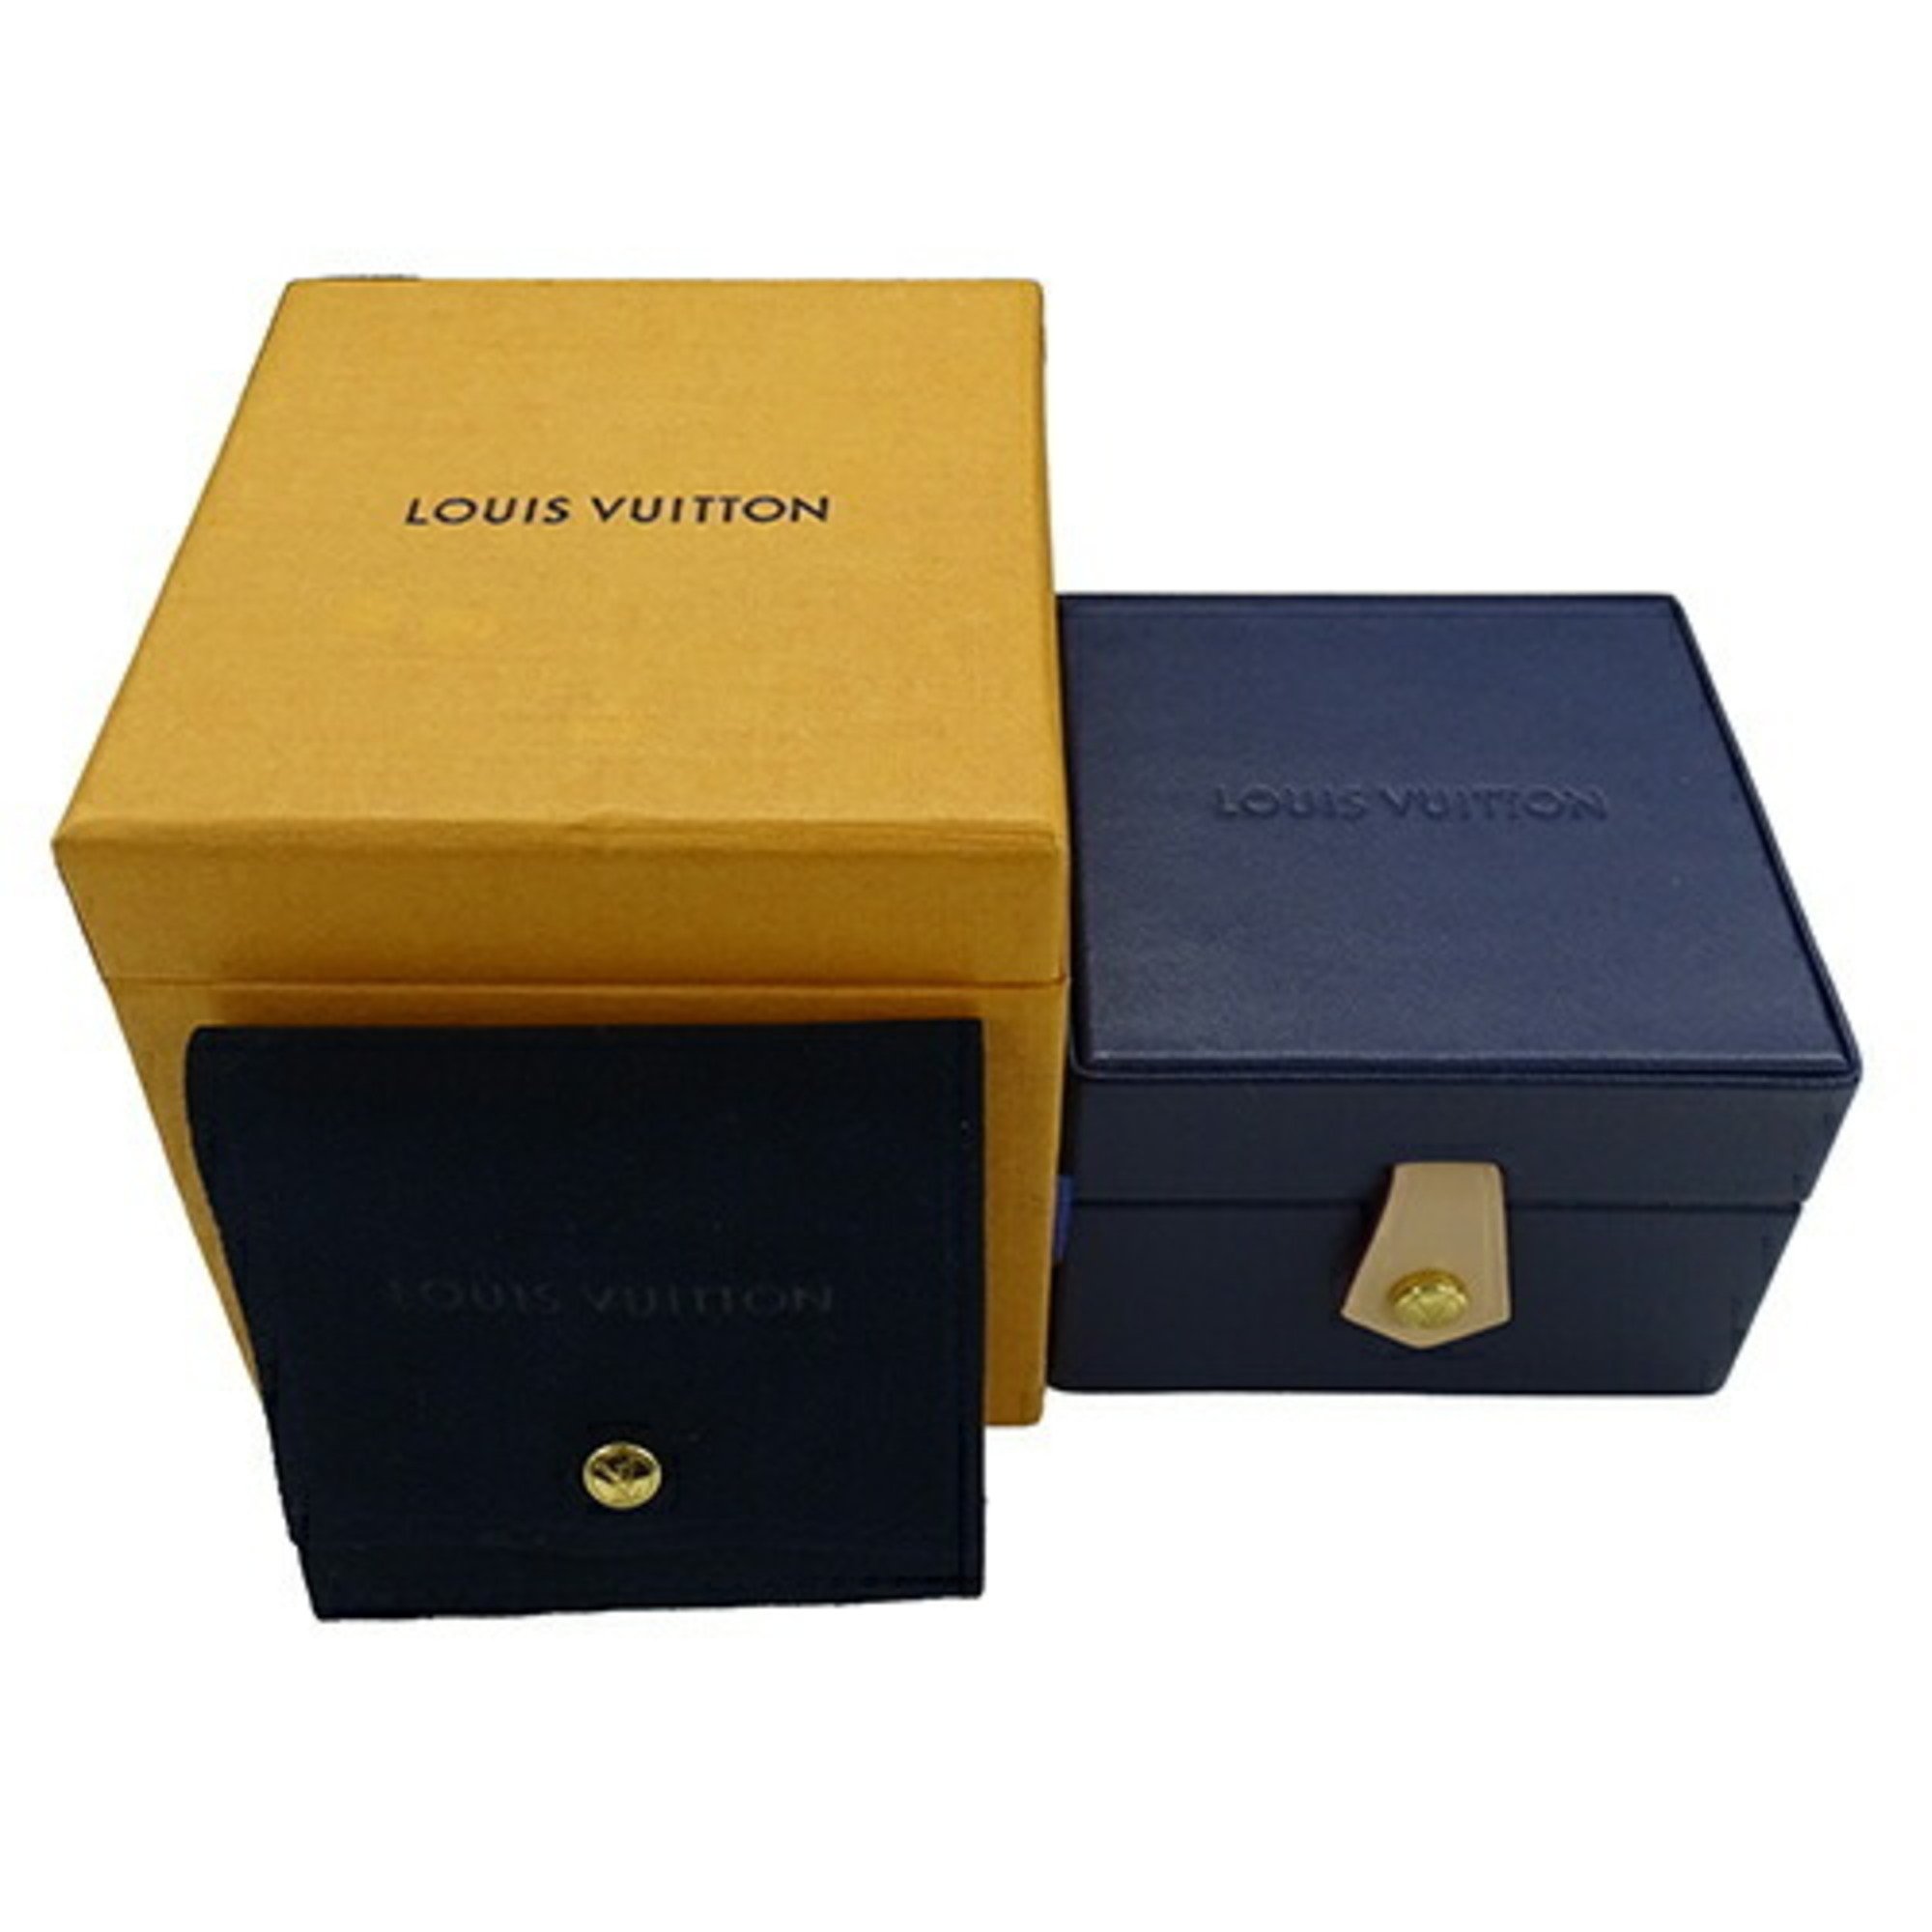 Louis Vuitton LOUIS VUITTON Necklace for Women 750WG Pendant Empreinte White Gold Q93967 Polished